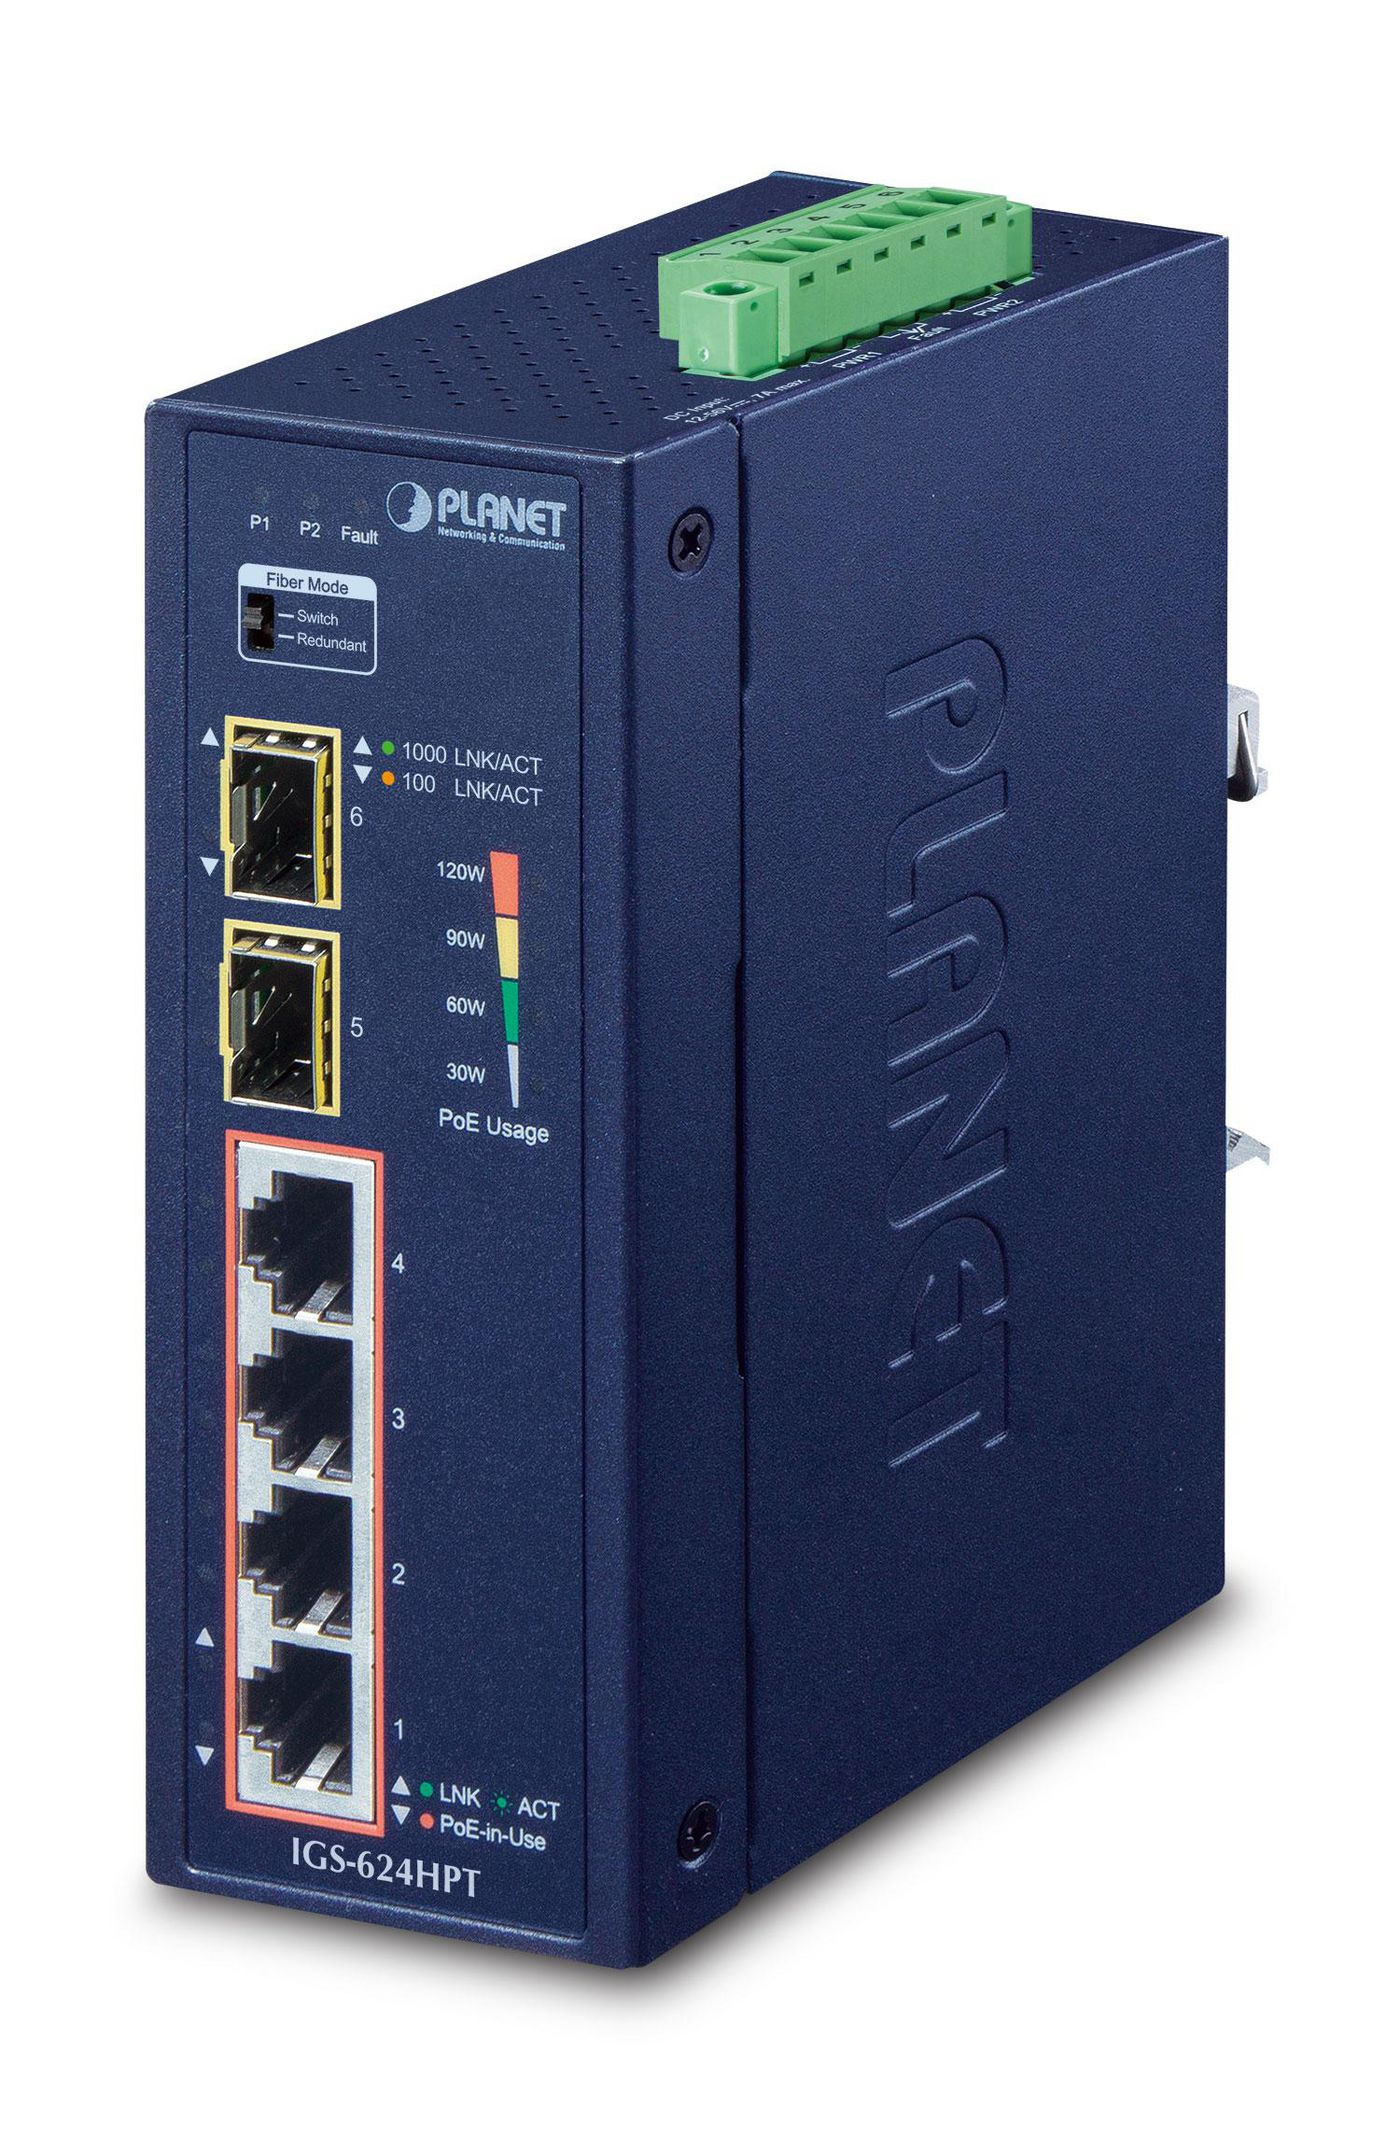 Planet IGS-624HPT IP30 6-Port Gigabit Switch 